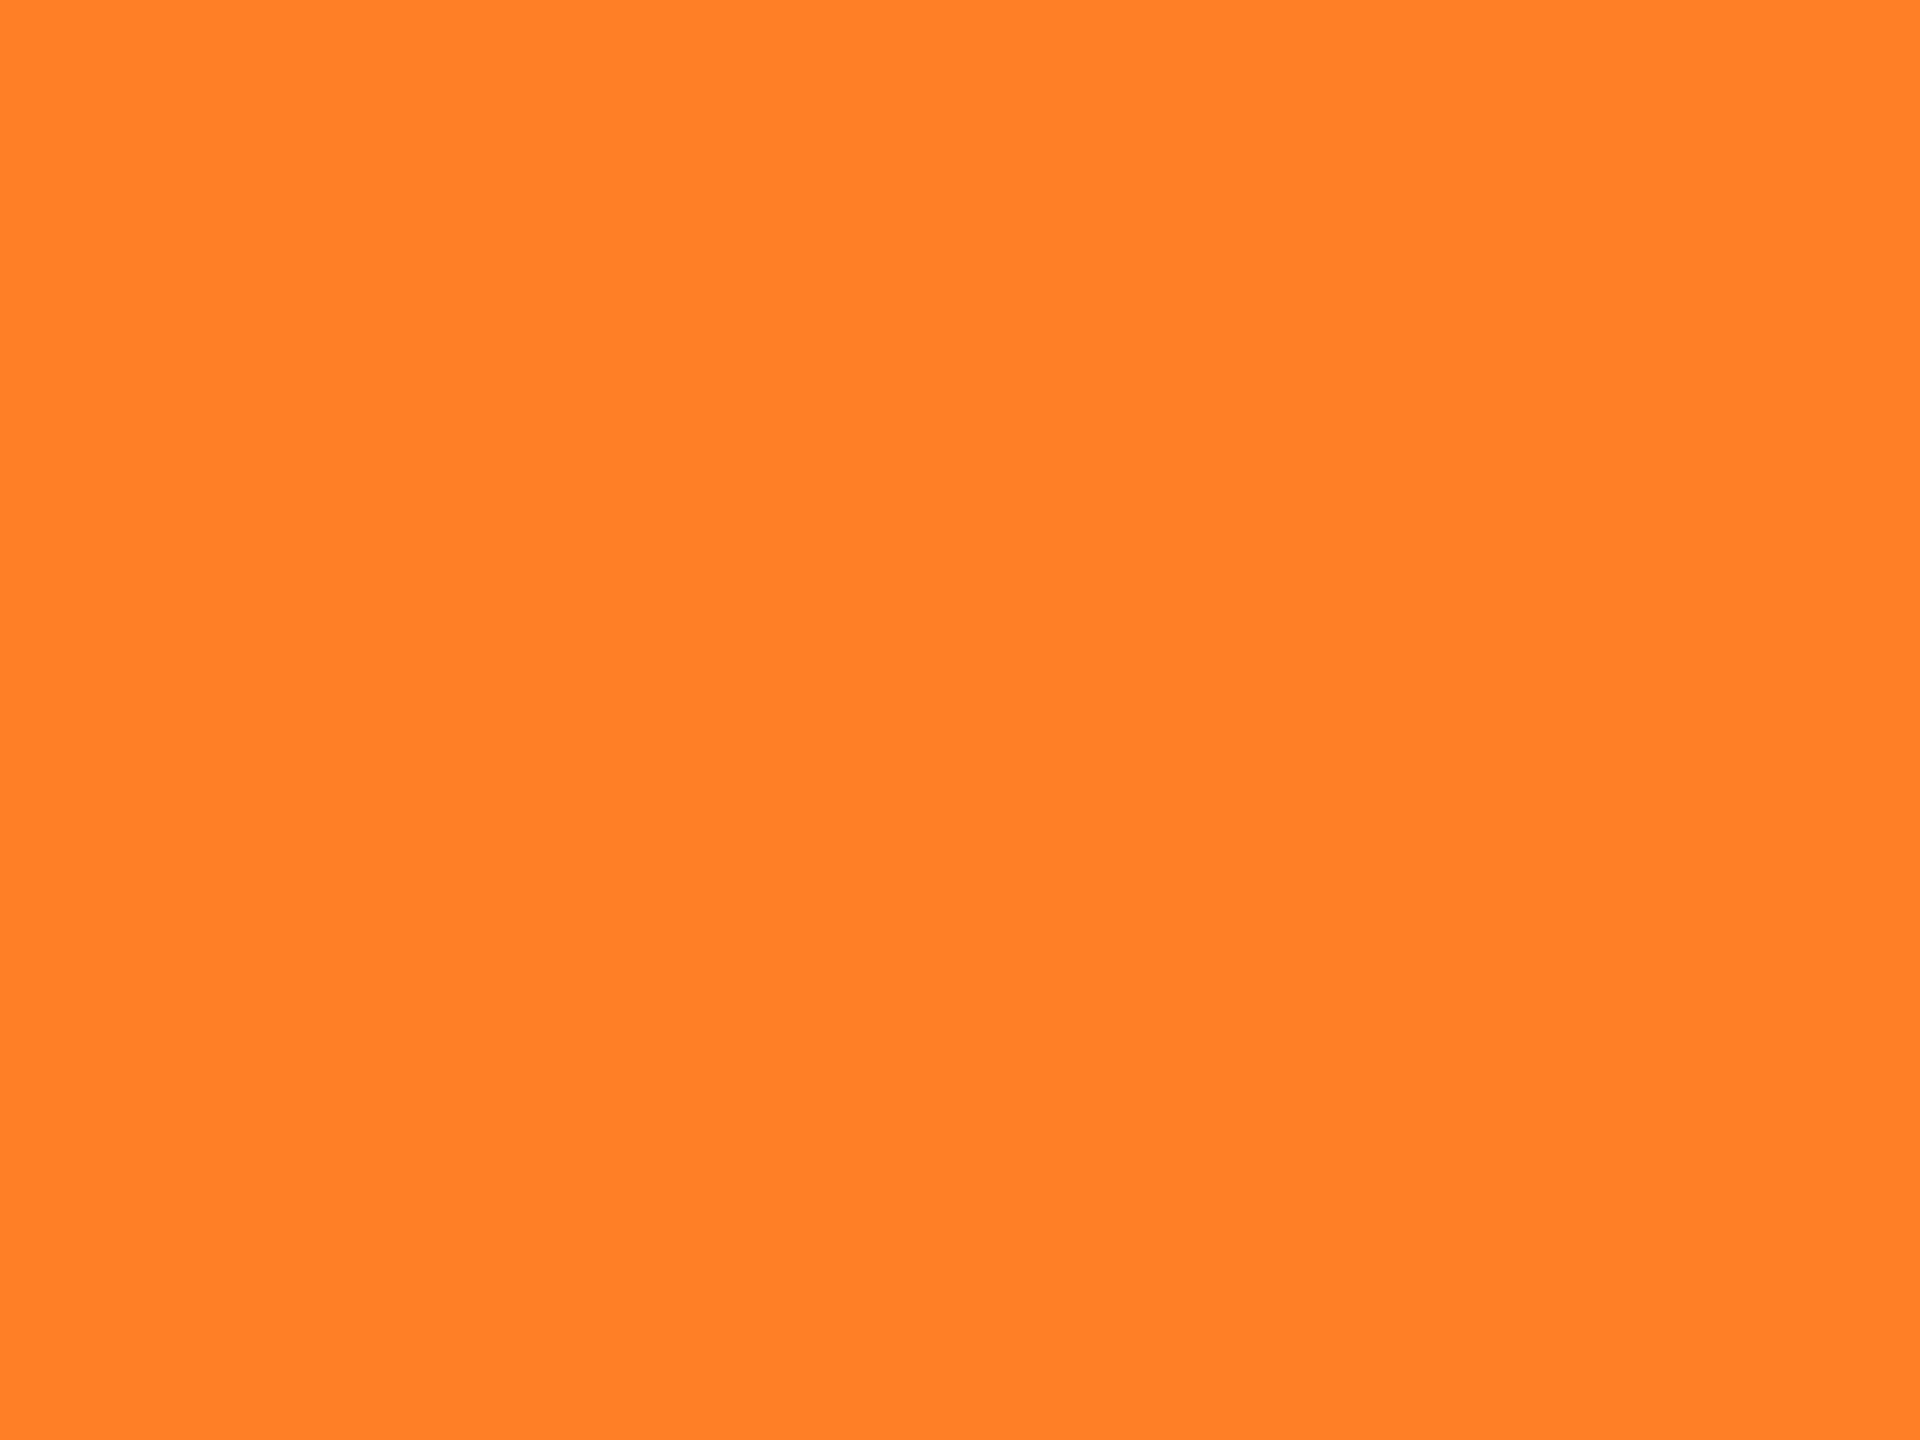 1920x1440 47+] Solid Orange Wallpaper